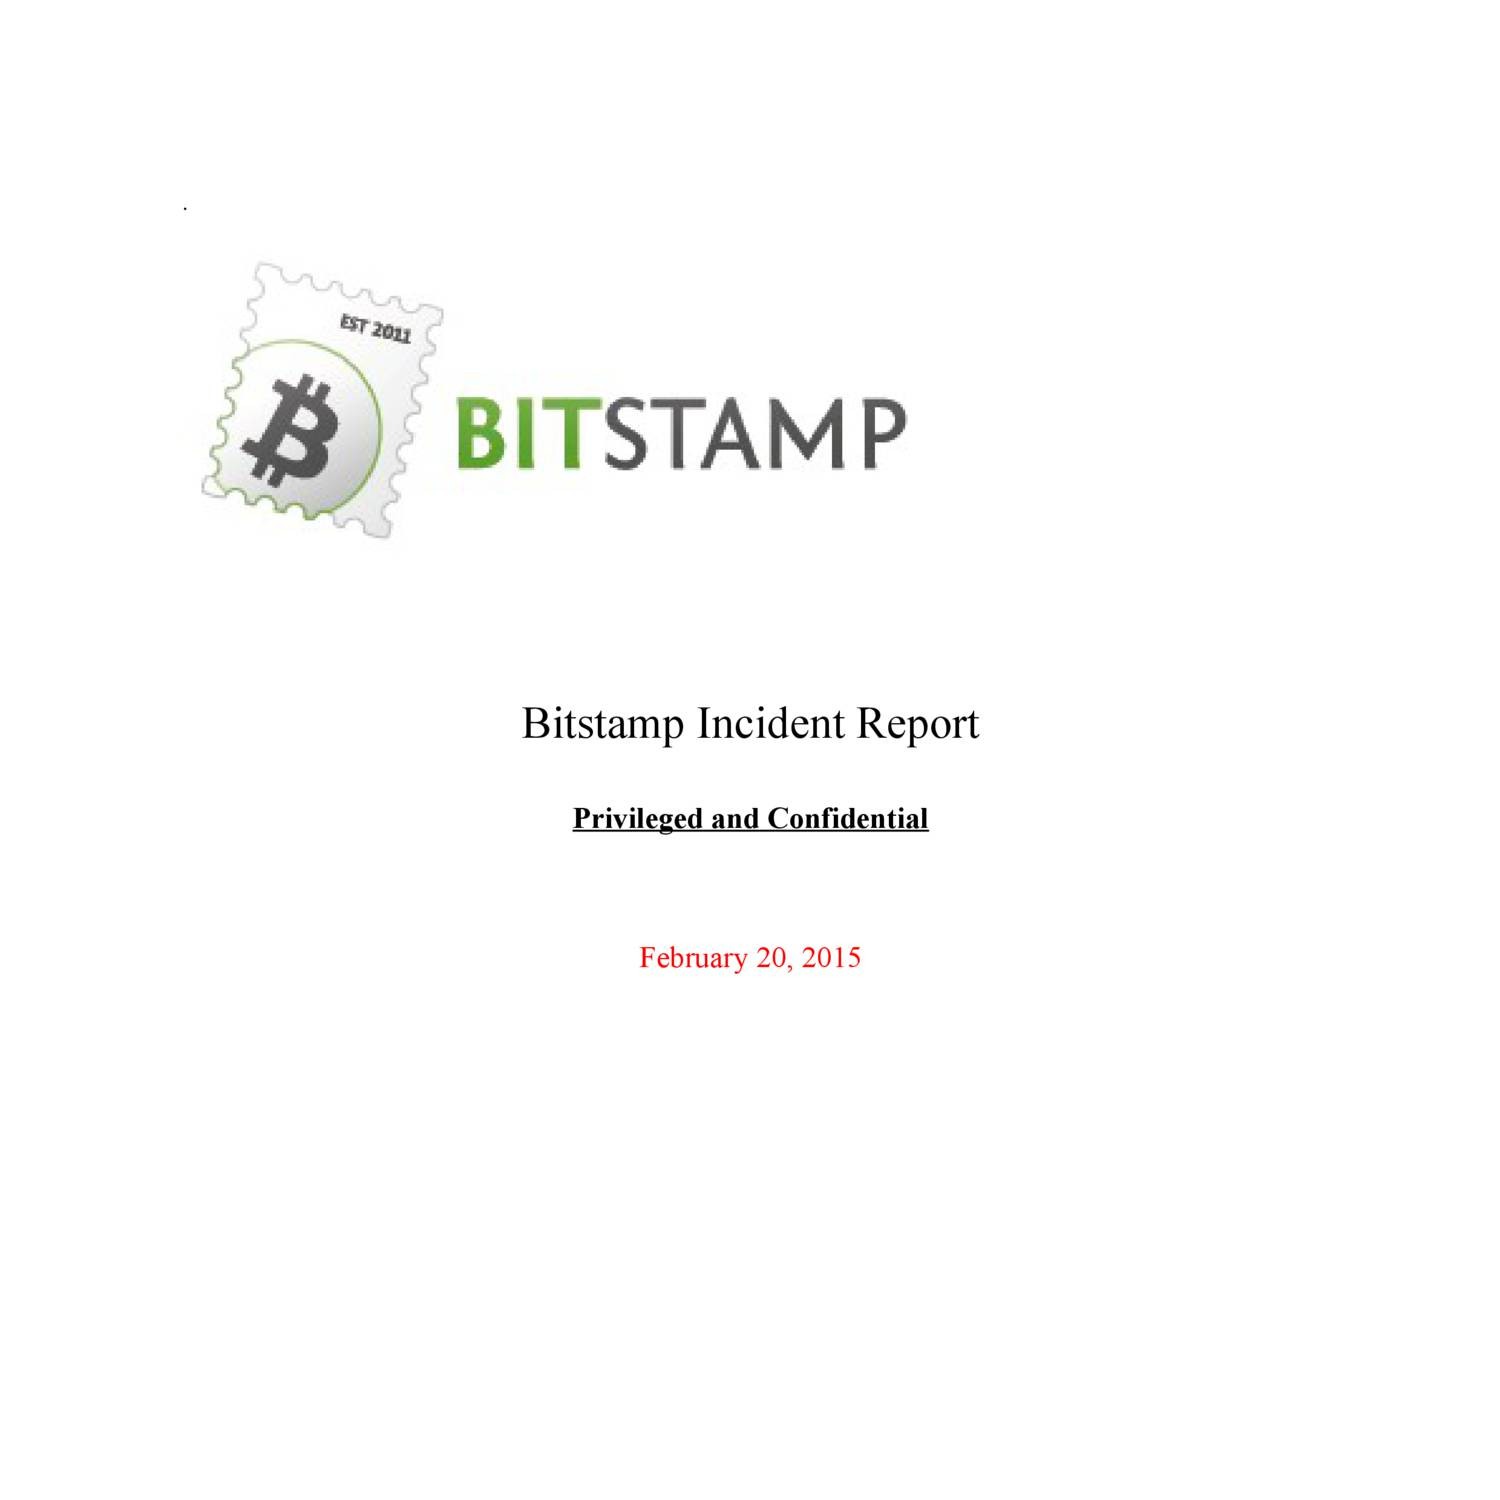 270137312-Bitstamp-Incident-Report-2-20-15.pdf | DocDroid